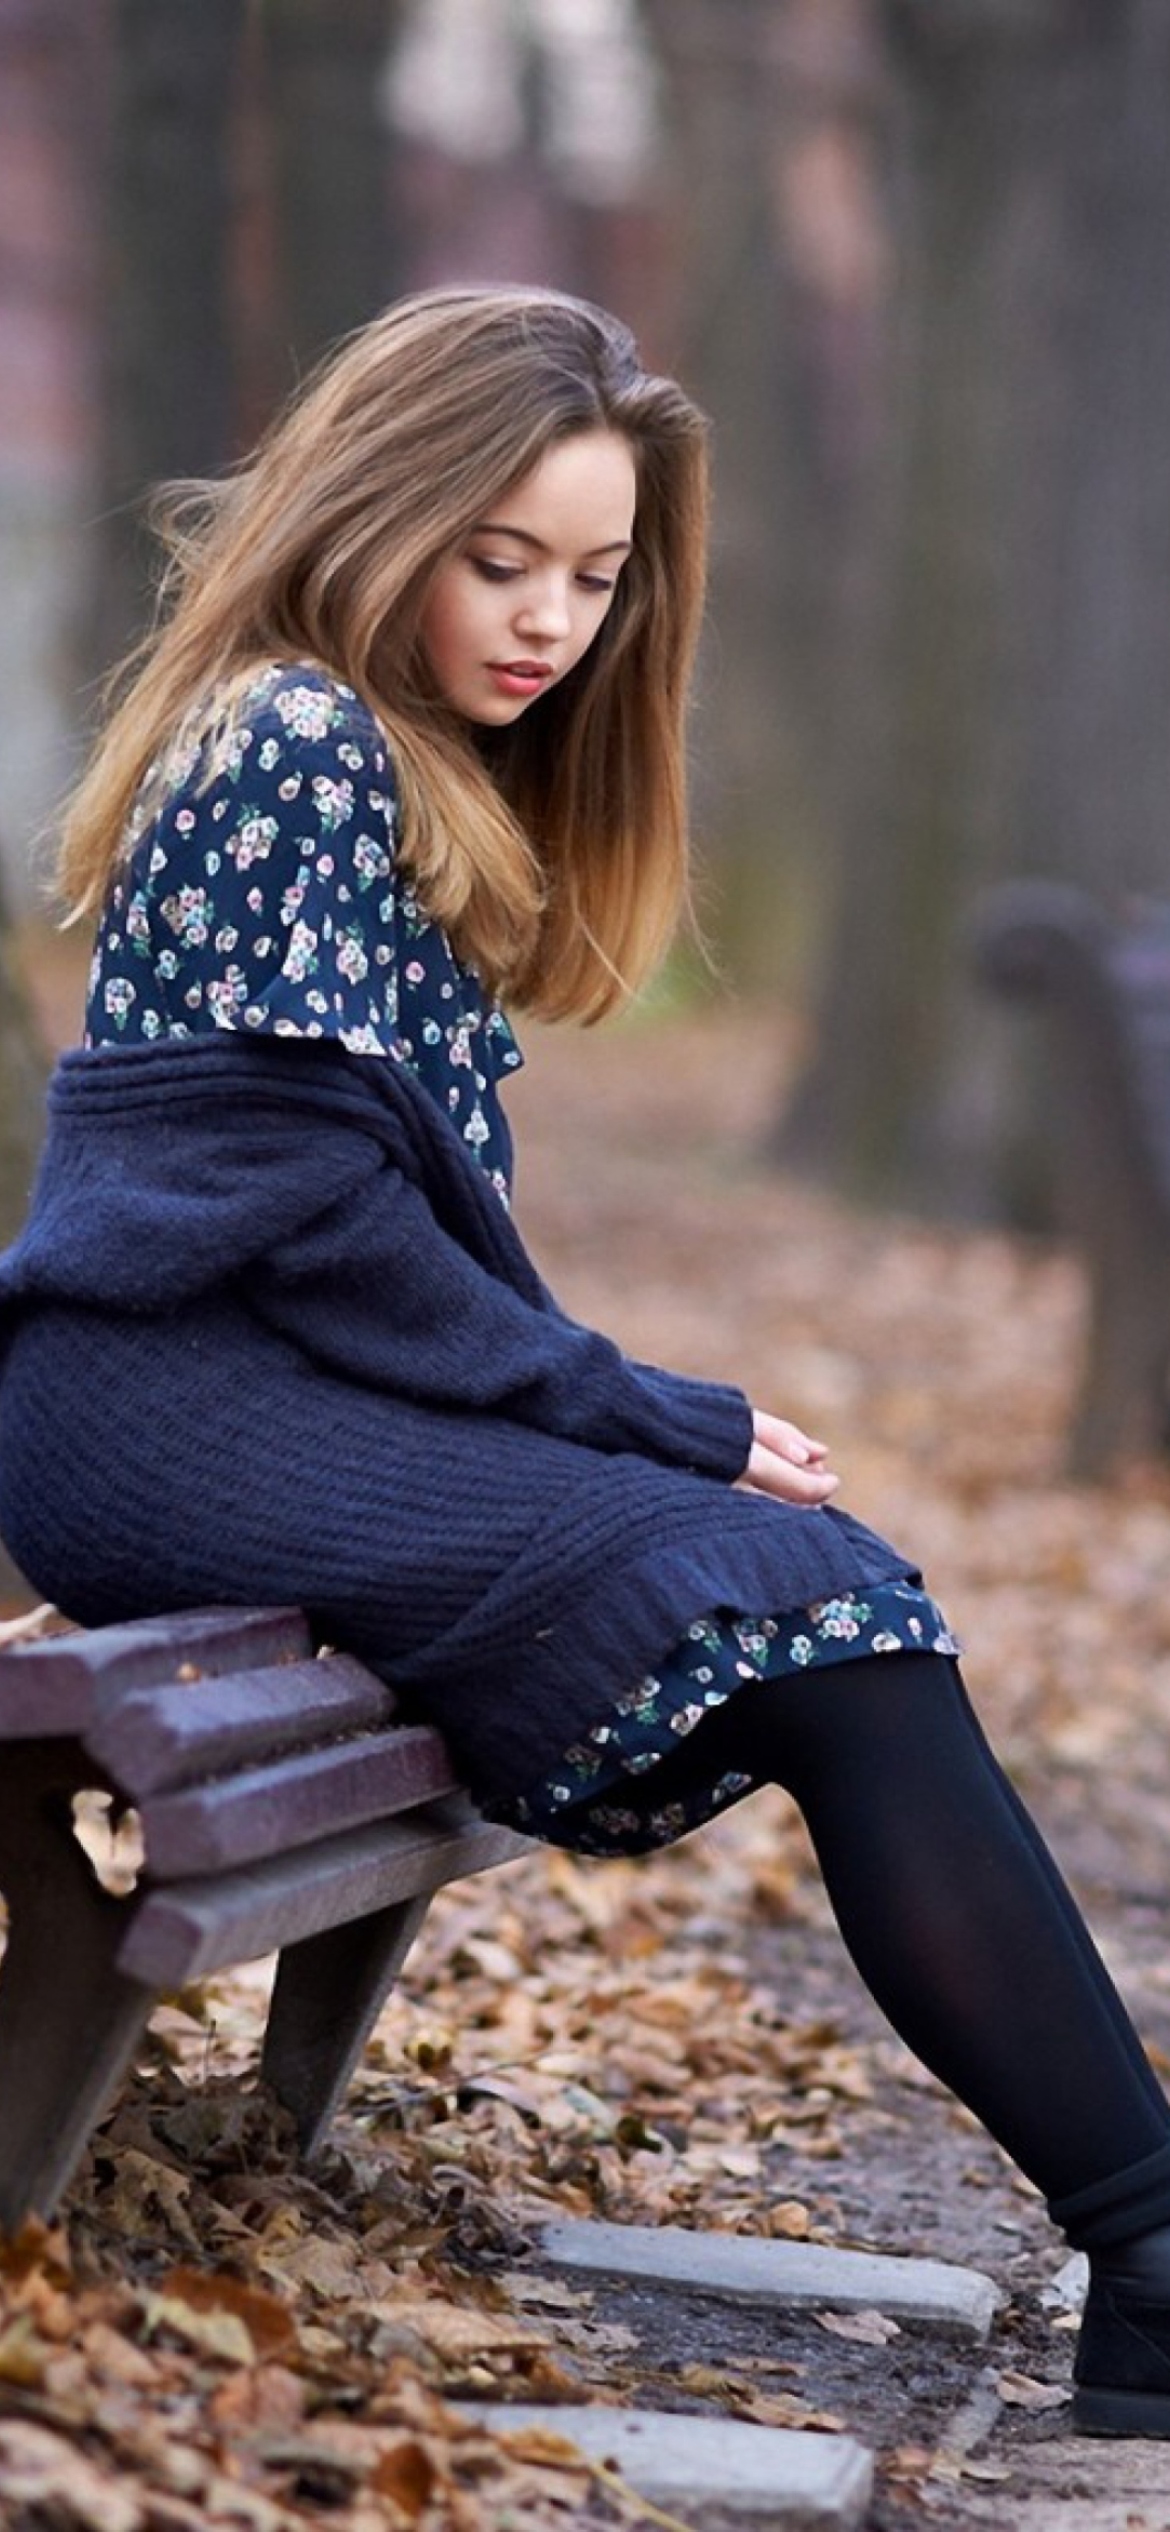 Обои Beautiful Girl Sitting On Bench In Autumn Park 1170x2532